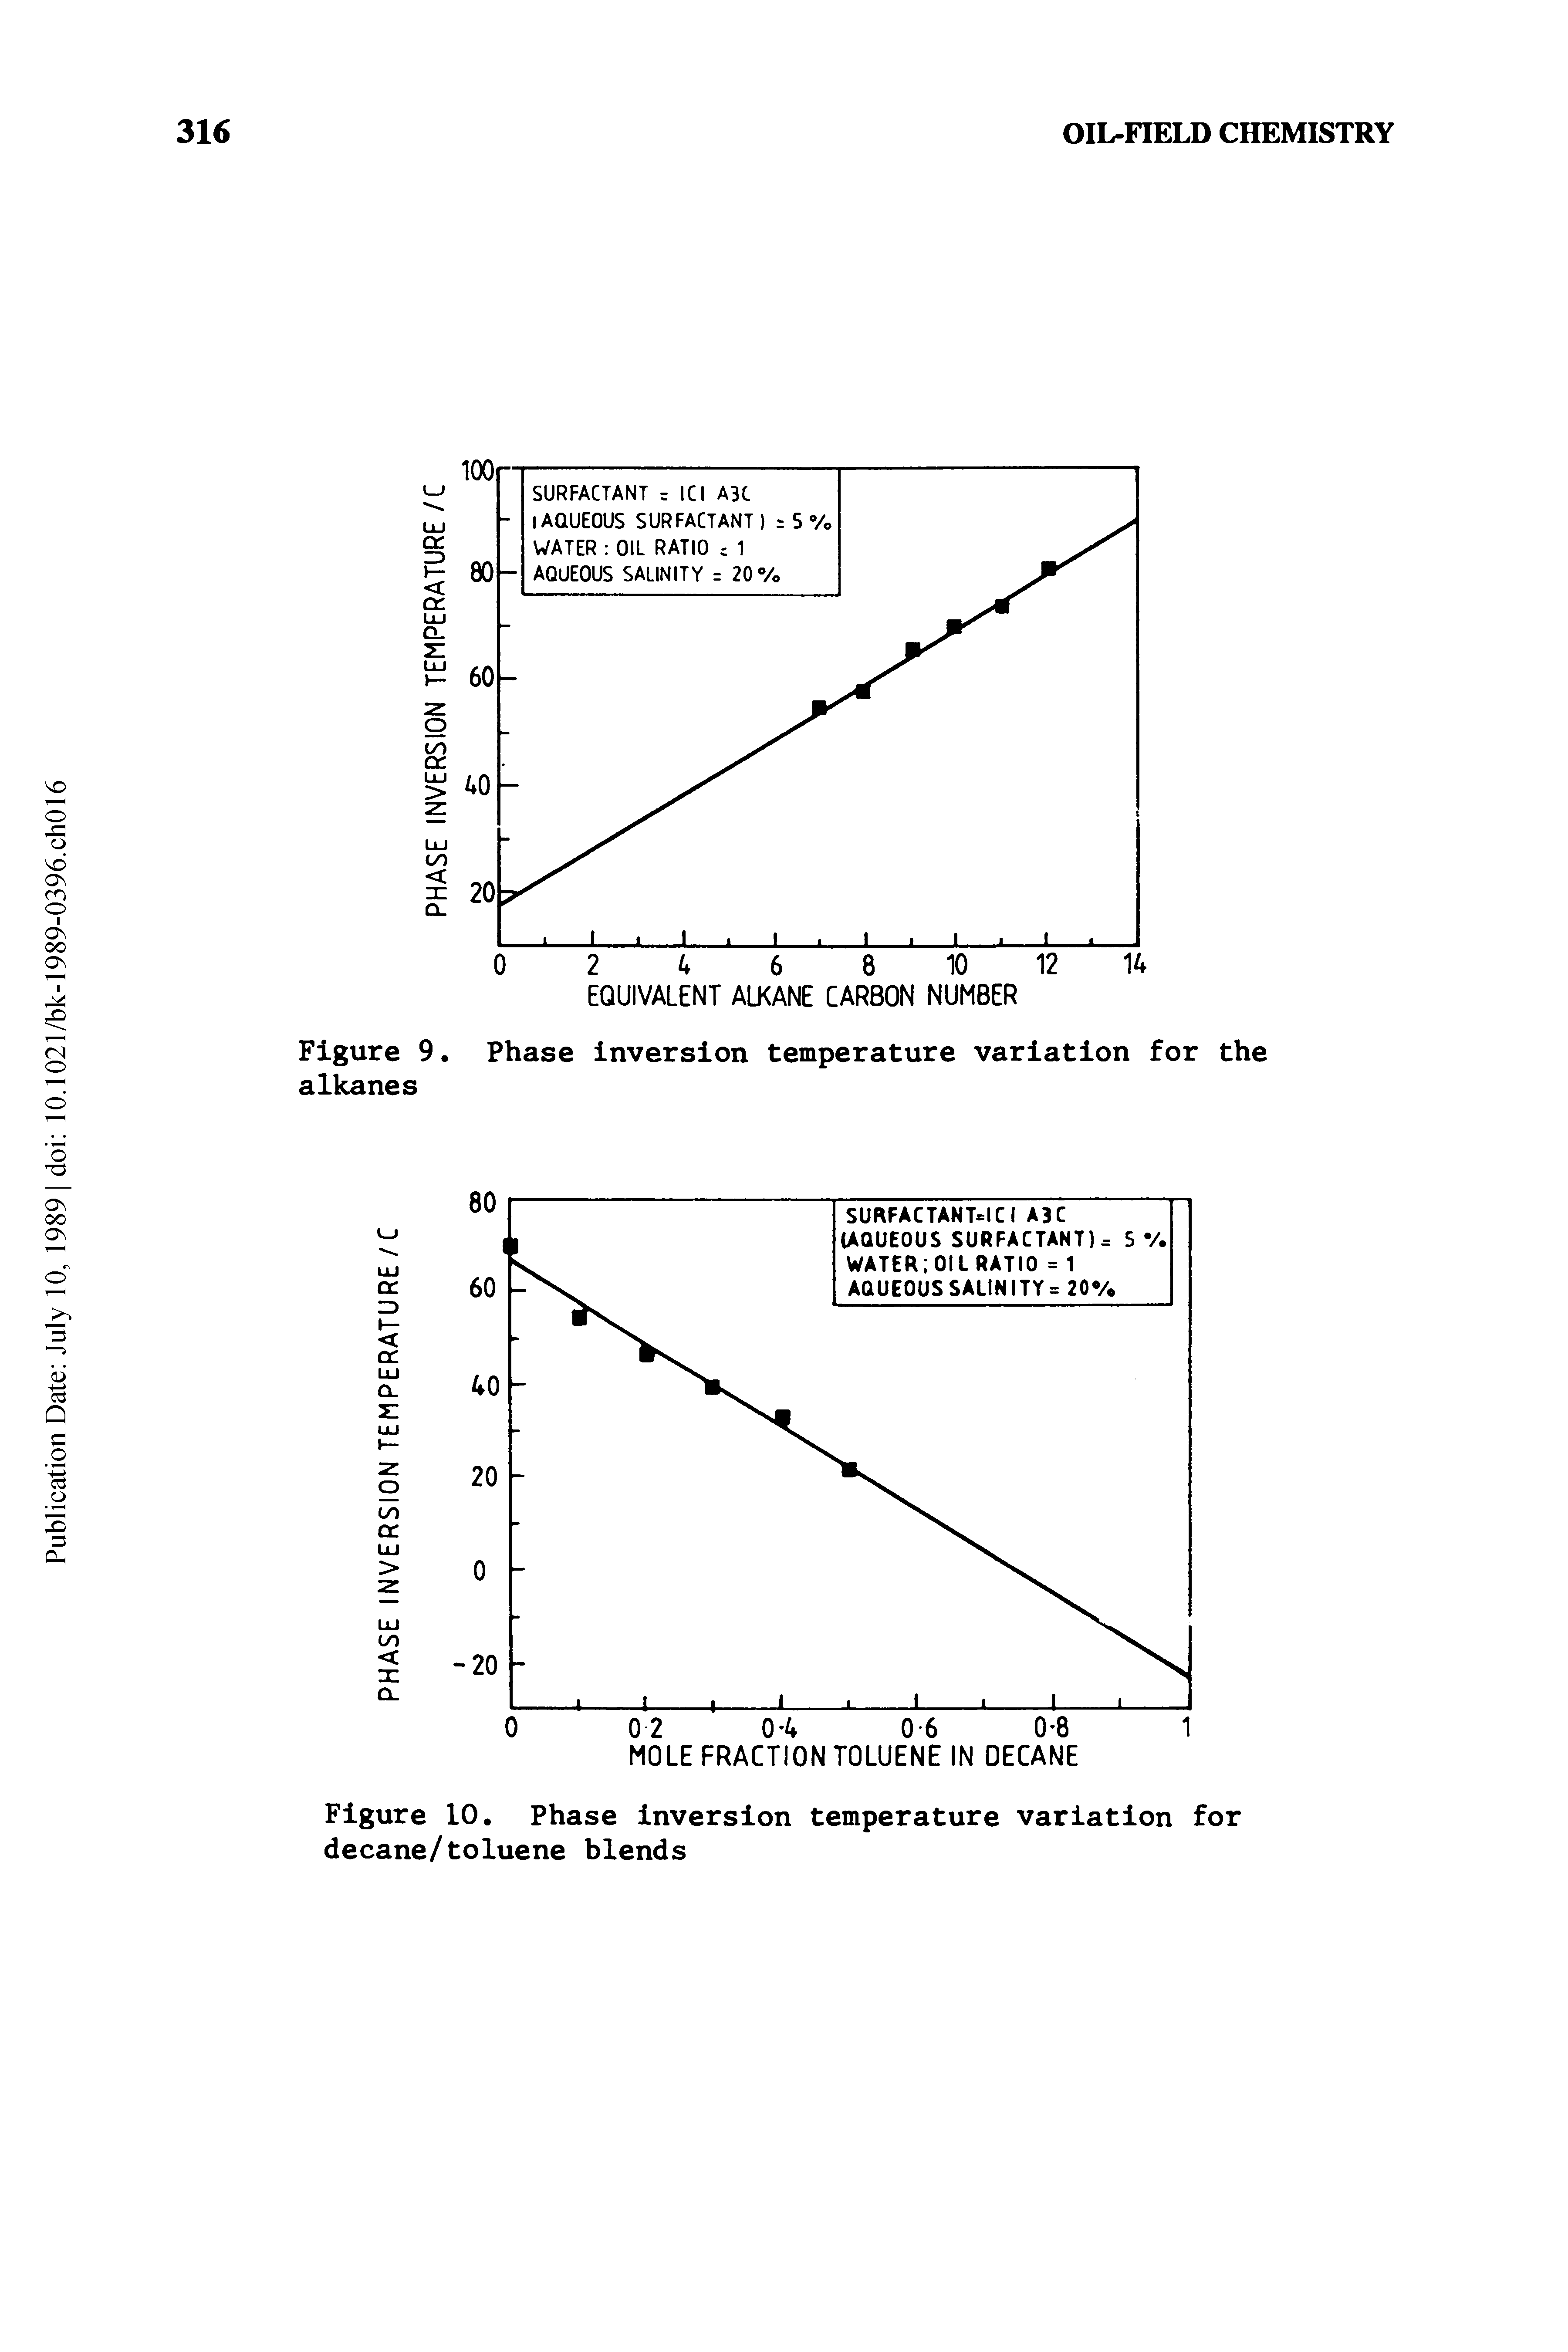 Figure 10. Phase inversion temperature variation for decane/toluene blends...